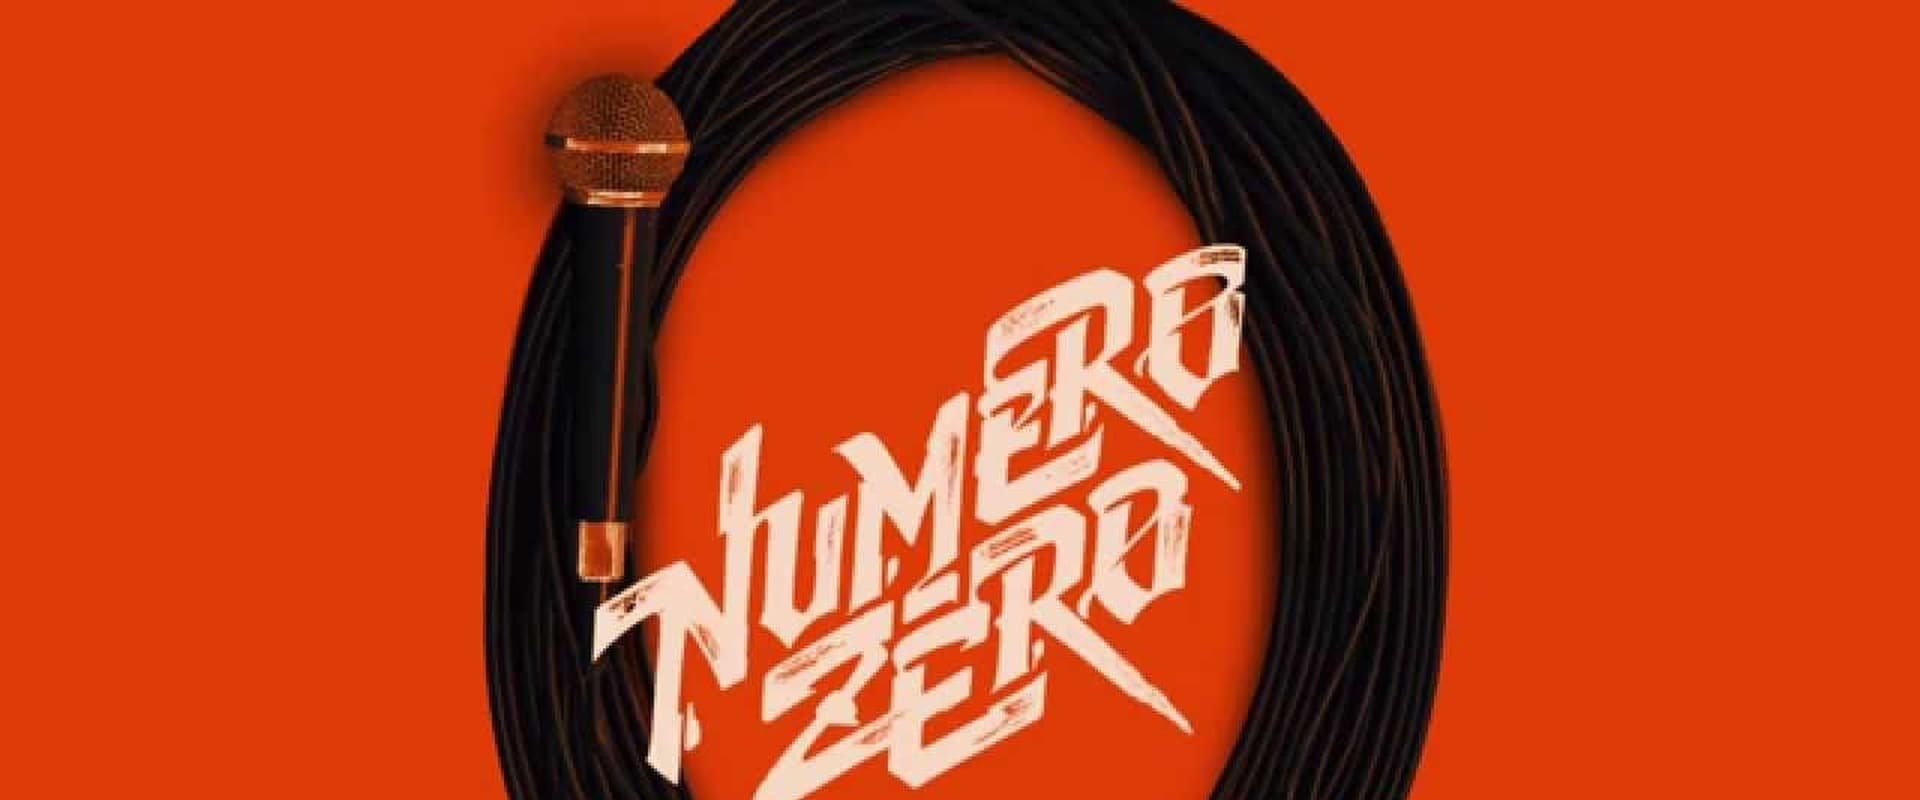 Numero Zero: The Roots of Italian Rap